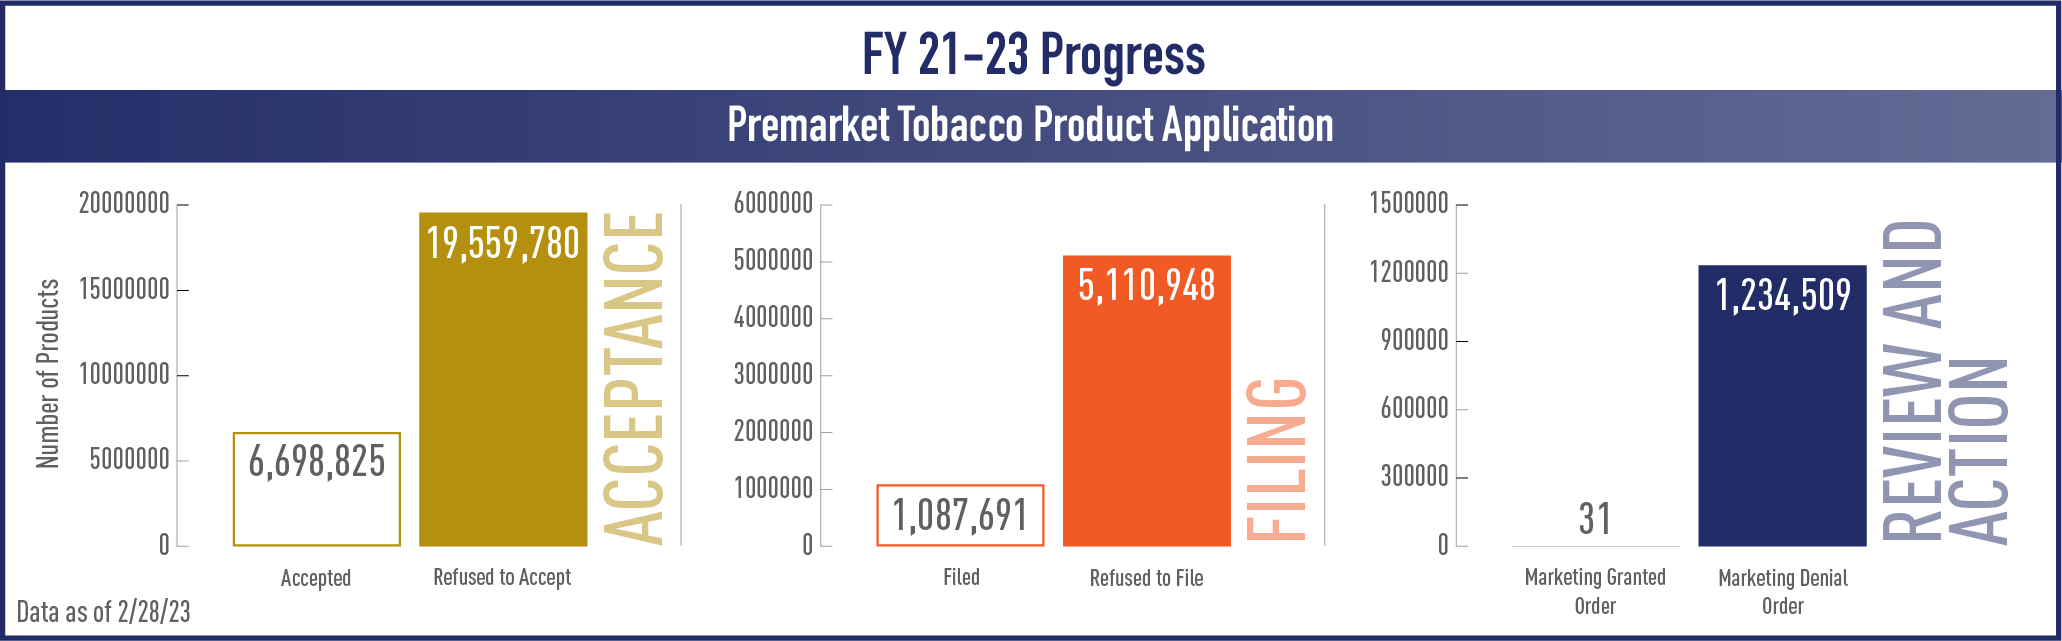 Premarket Tobacco Product Application bar graph